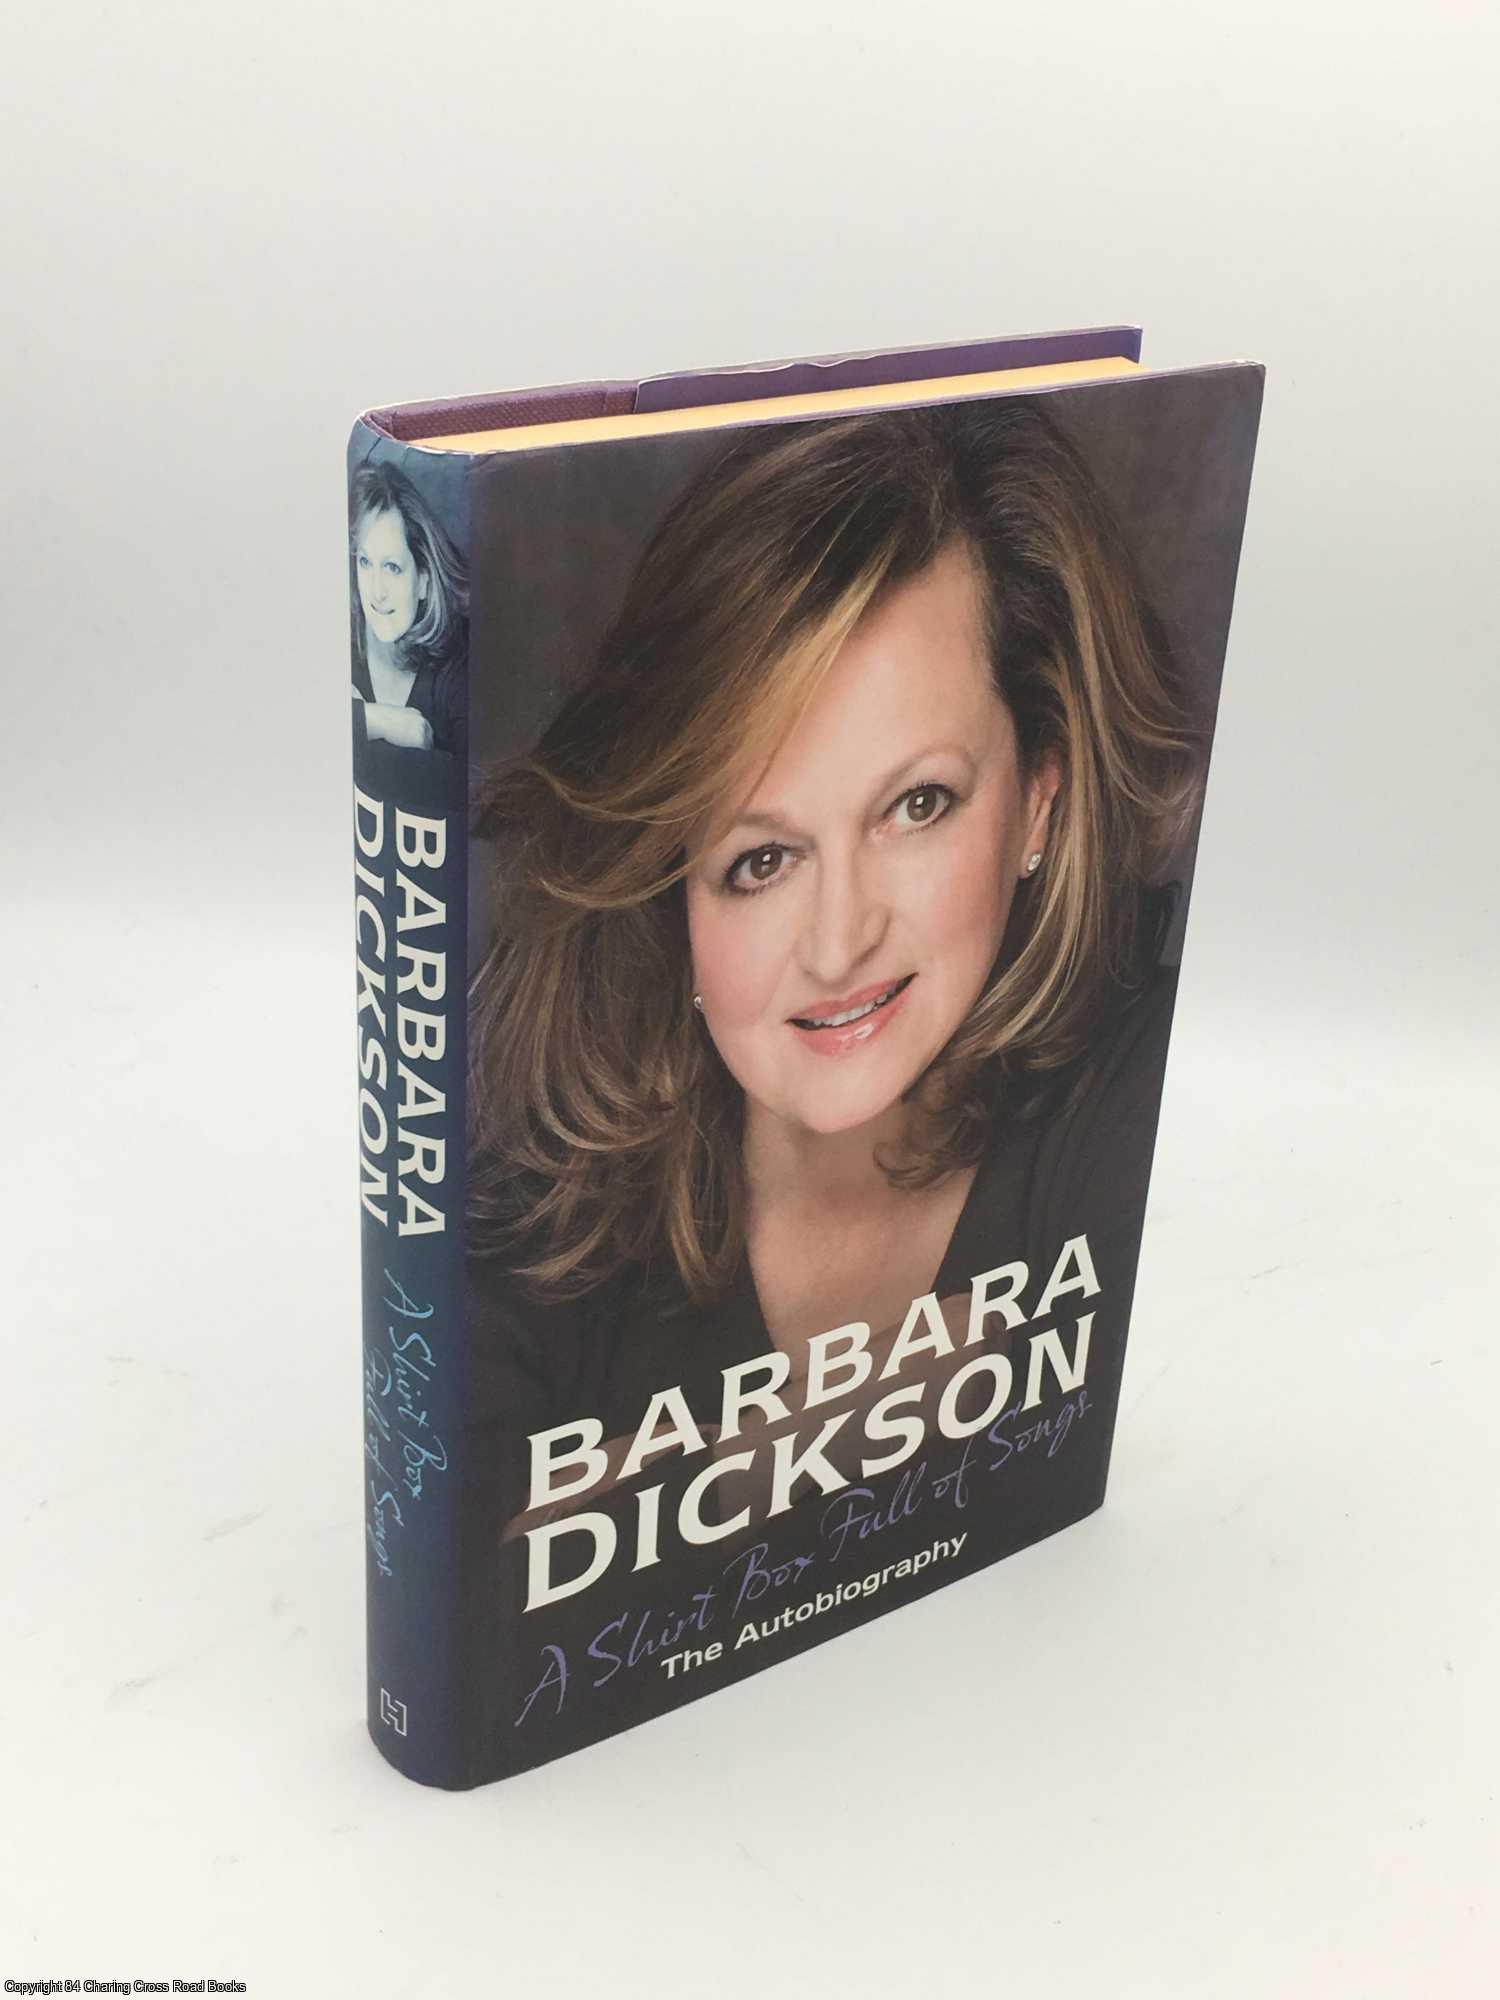 Dickson, Barbara - Shirt Box Full of Songs